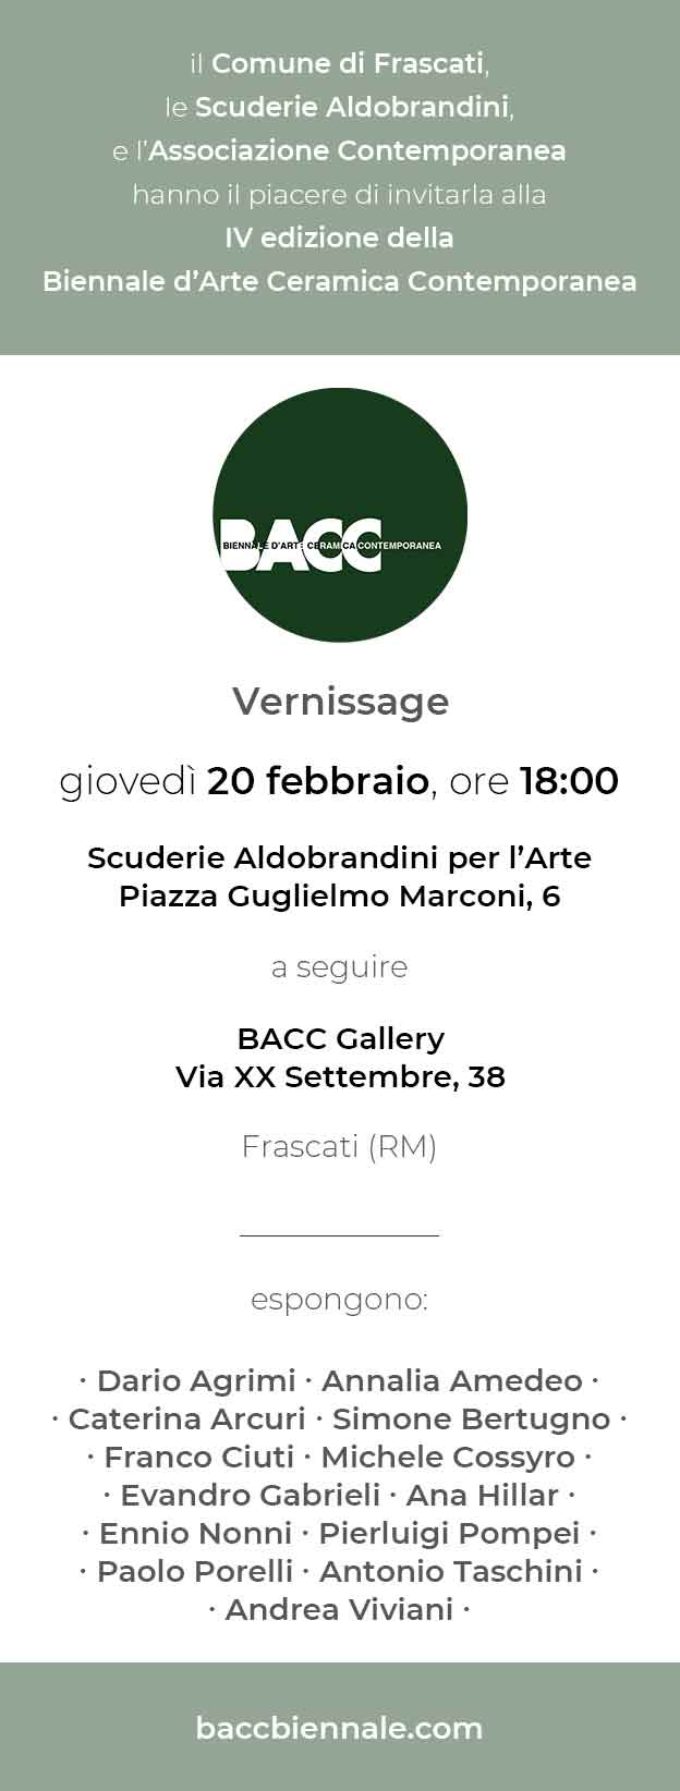 Frascati, torna la Biennale di Arte Ceramica Contemporanea